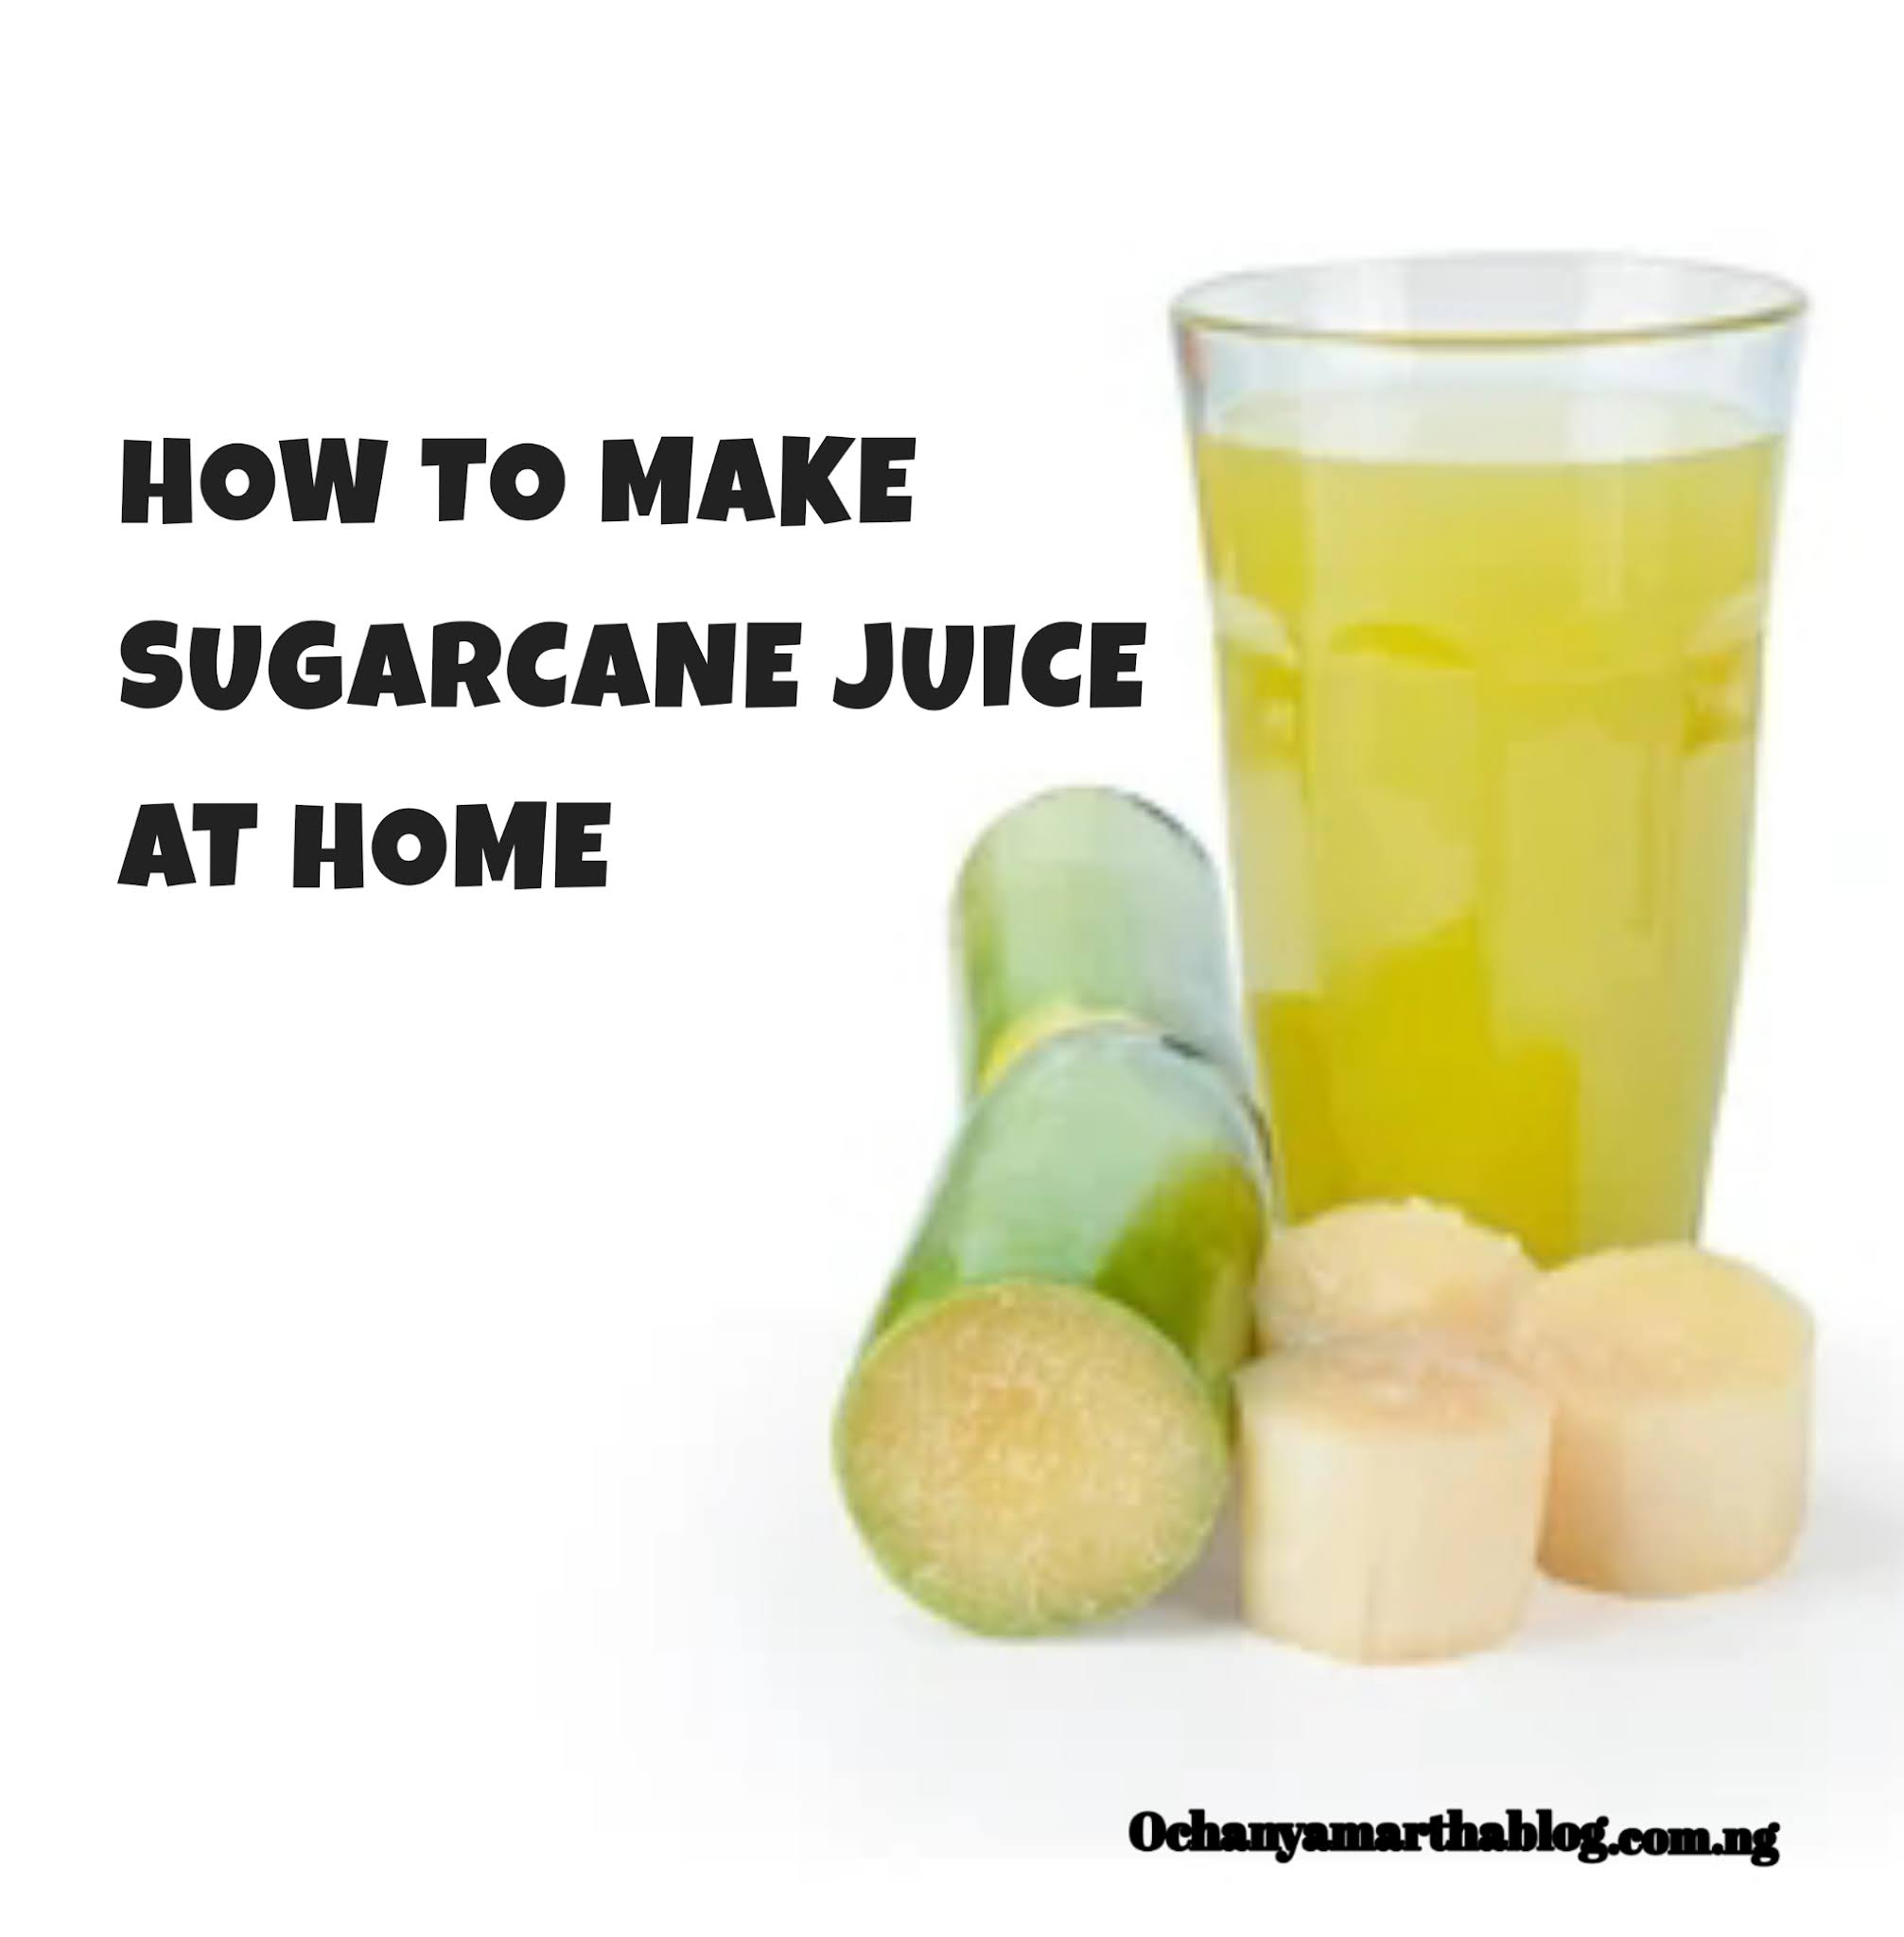 HOW TO MAKE SUGARCANE JUICE AT HOME